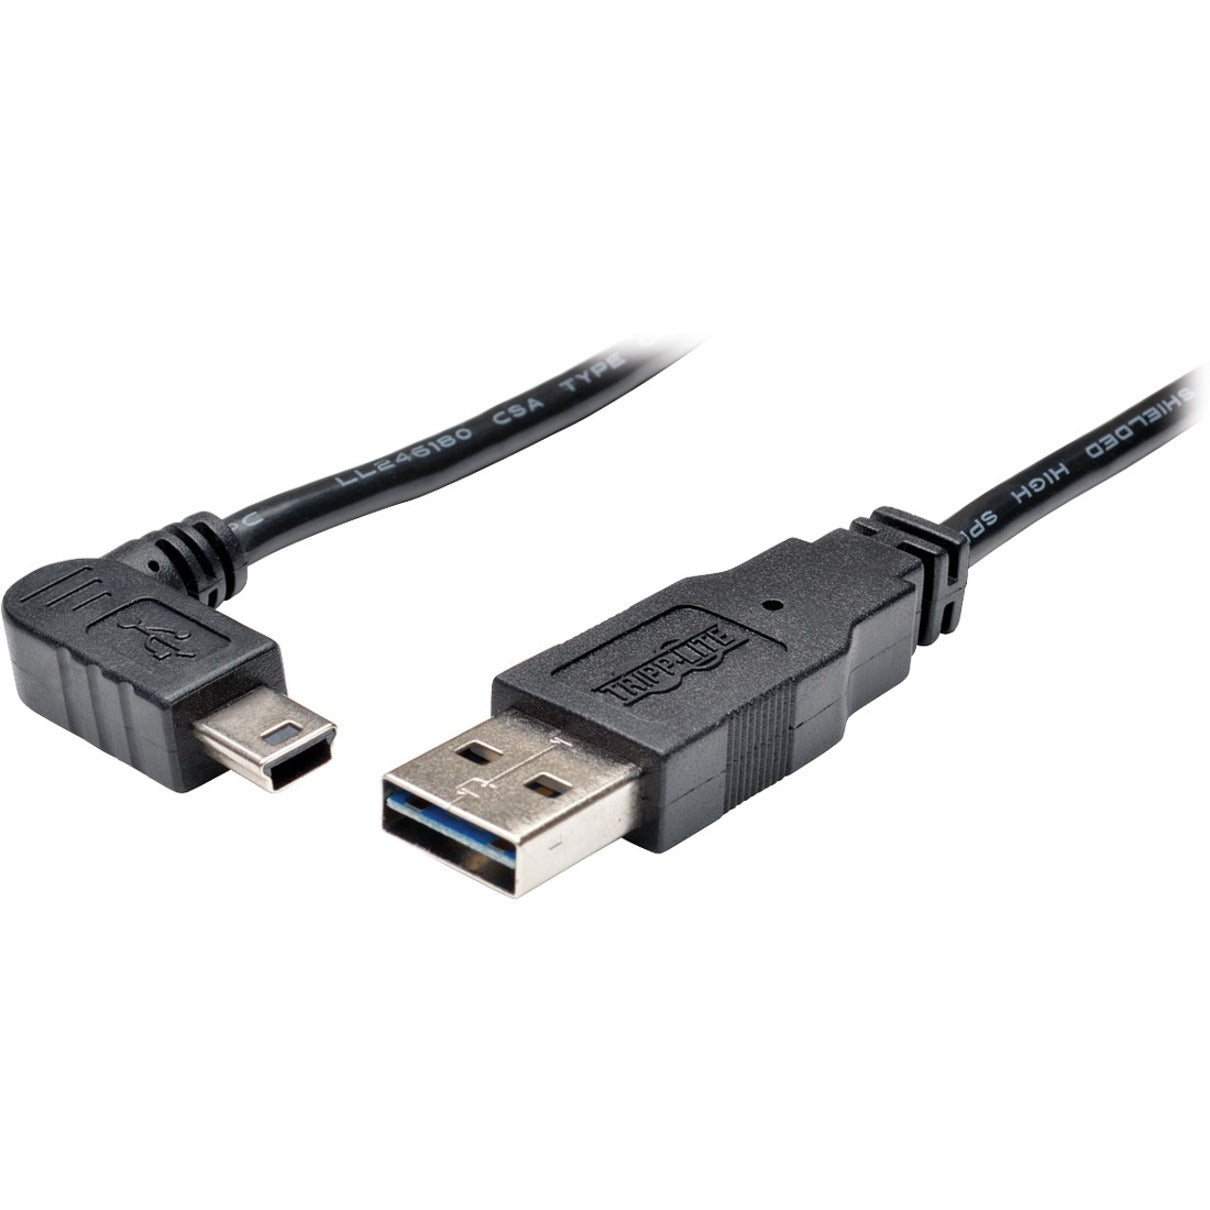 Tripp Lite UR030-006-RAB USB Data Transfer Cable, 6 ft, Right-Angle Mini USB 2.0 Type B - Male, Reversible